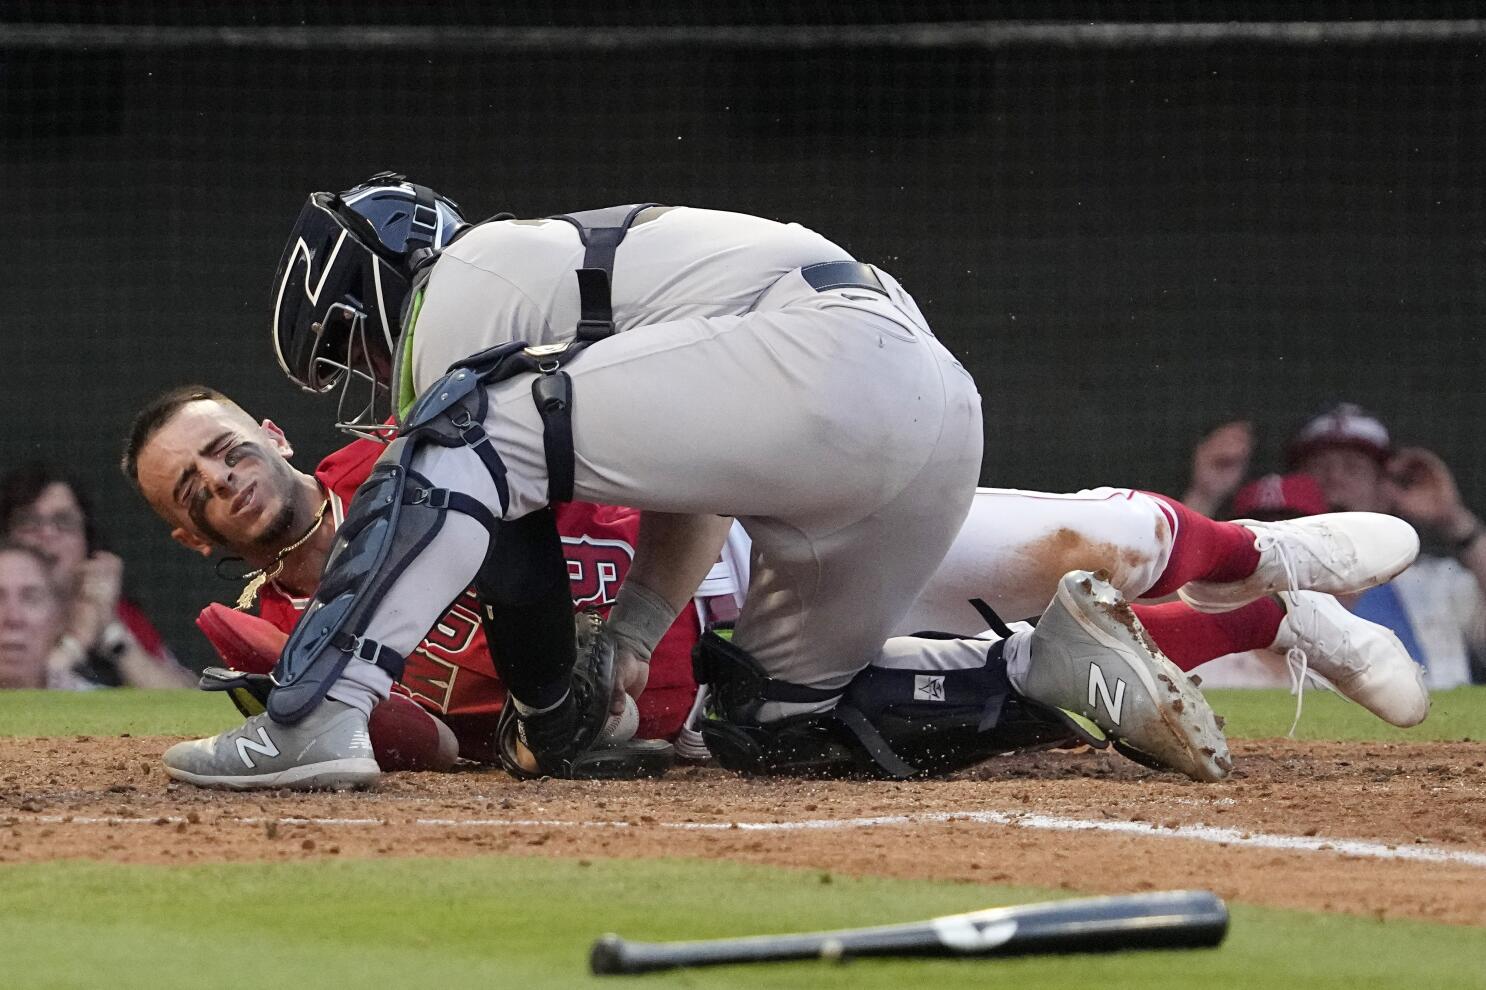 Yankees catcher Jose Trevino to undergo season-ending wrist surgery, National Sports